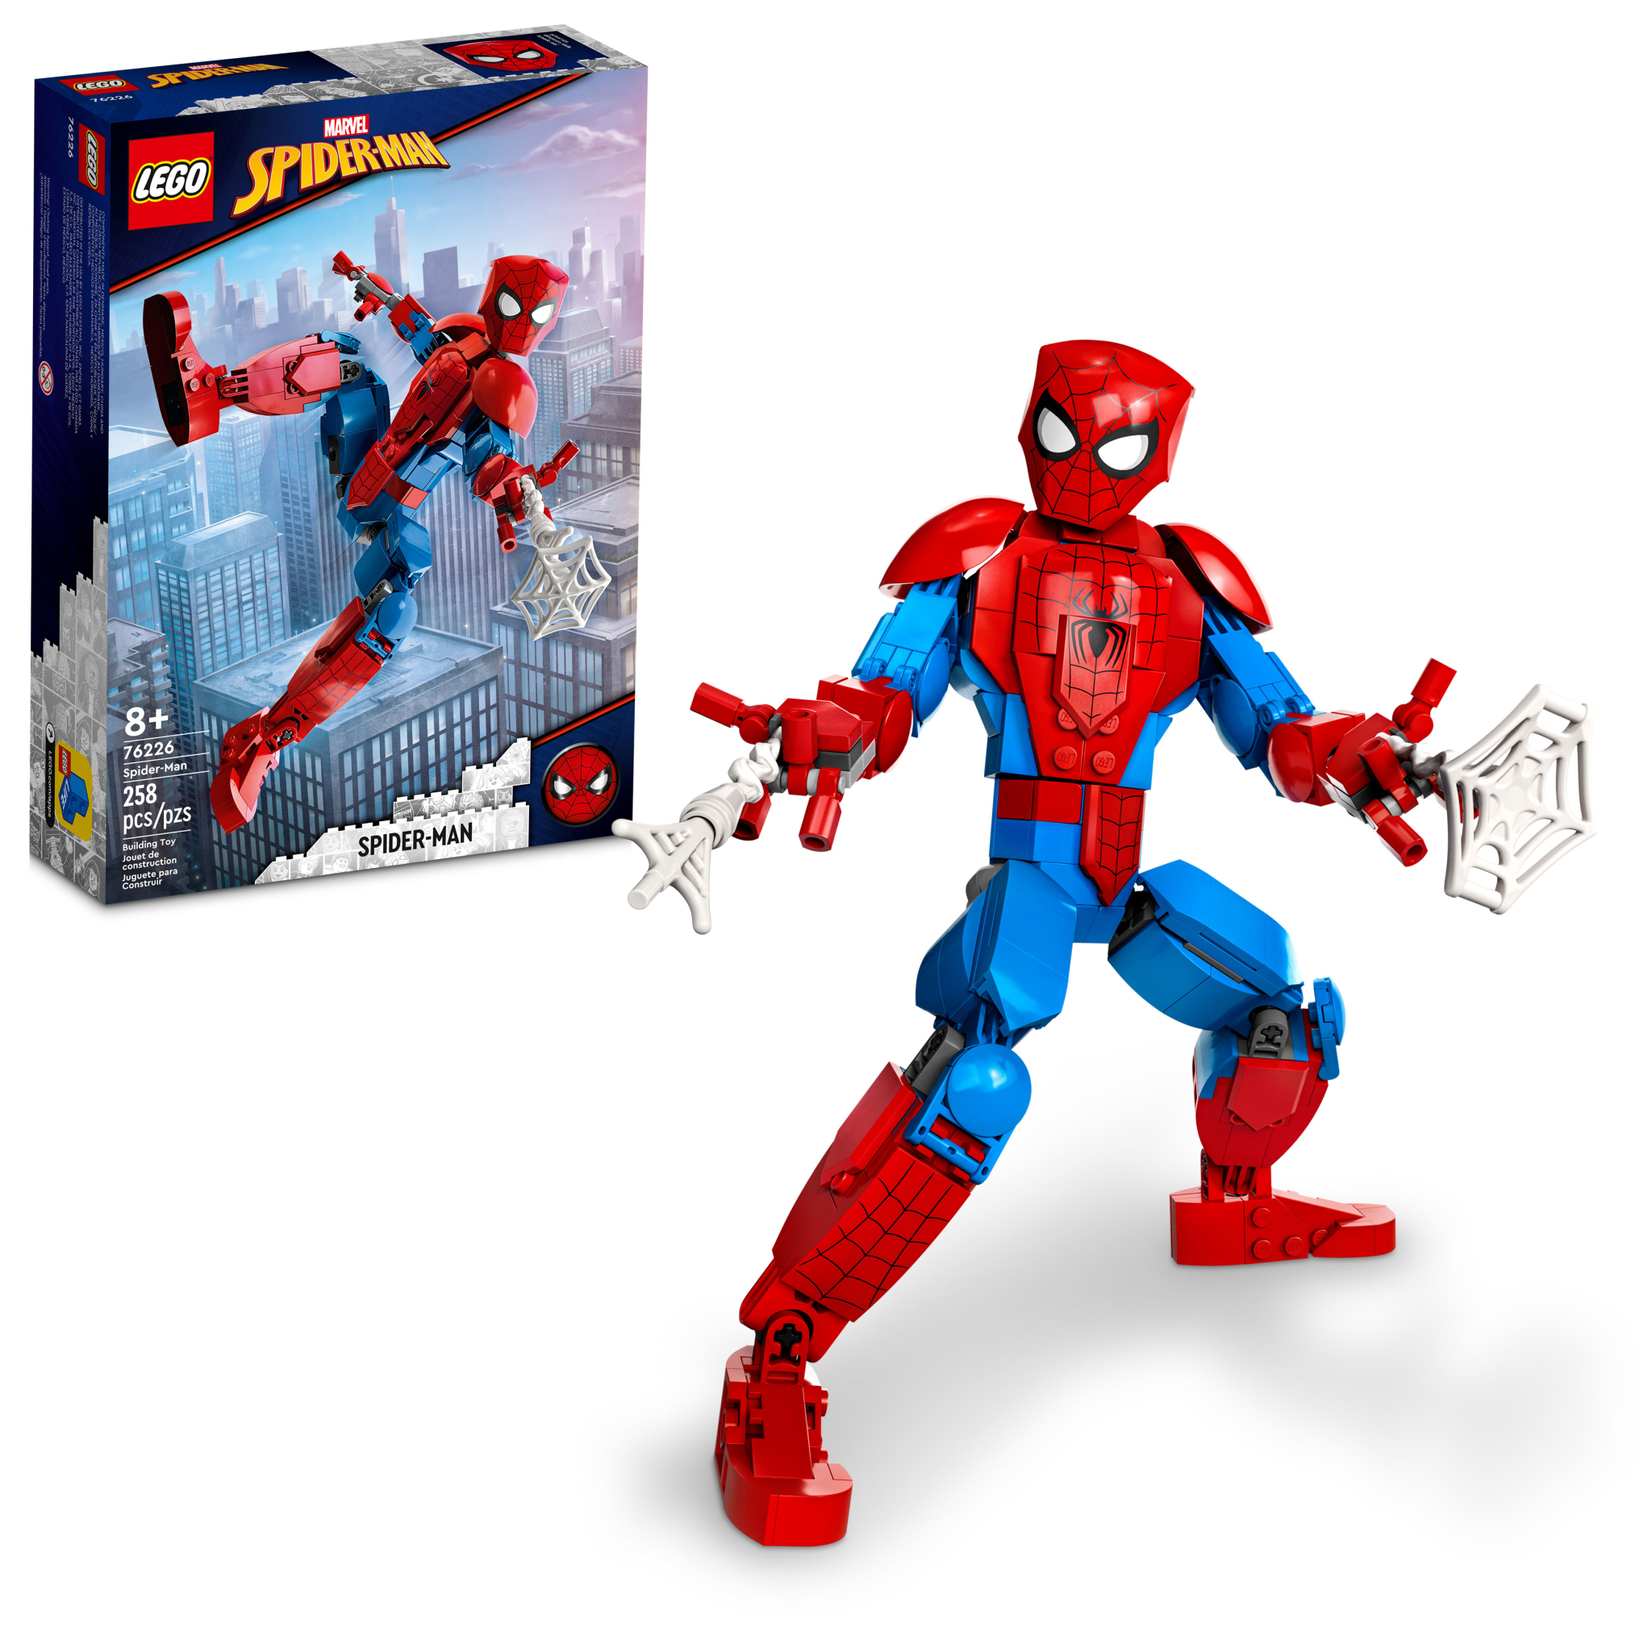 LEGO LEGO Marvel Super Heroes Spider-Man Figure 76226